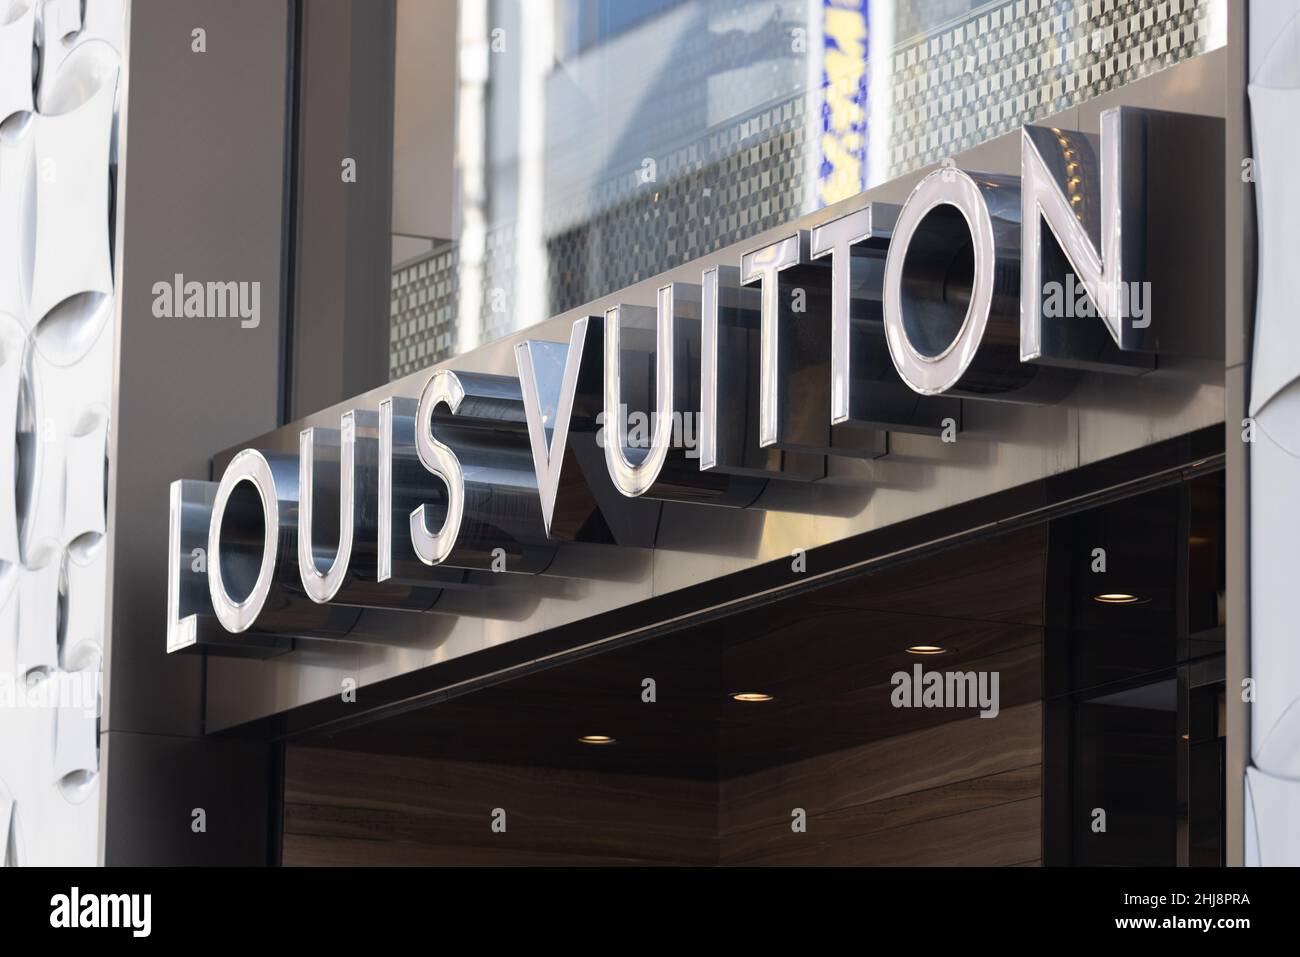 Gallery of Louis Vuitton Ginza Namiki / AS Co. + Peter Marino